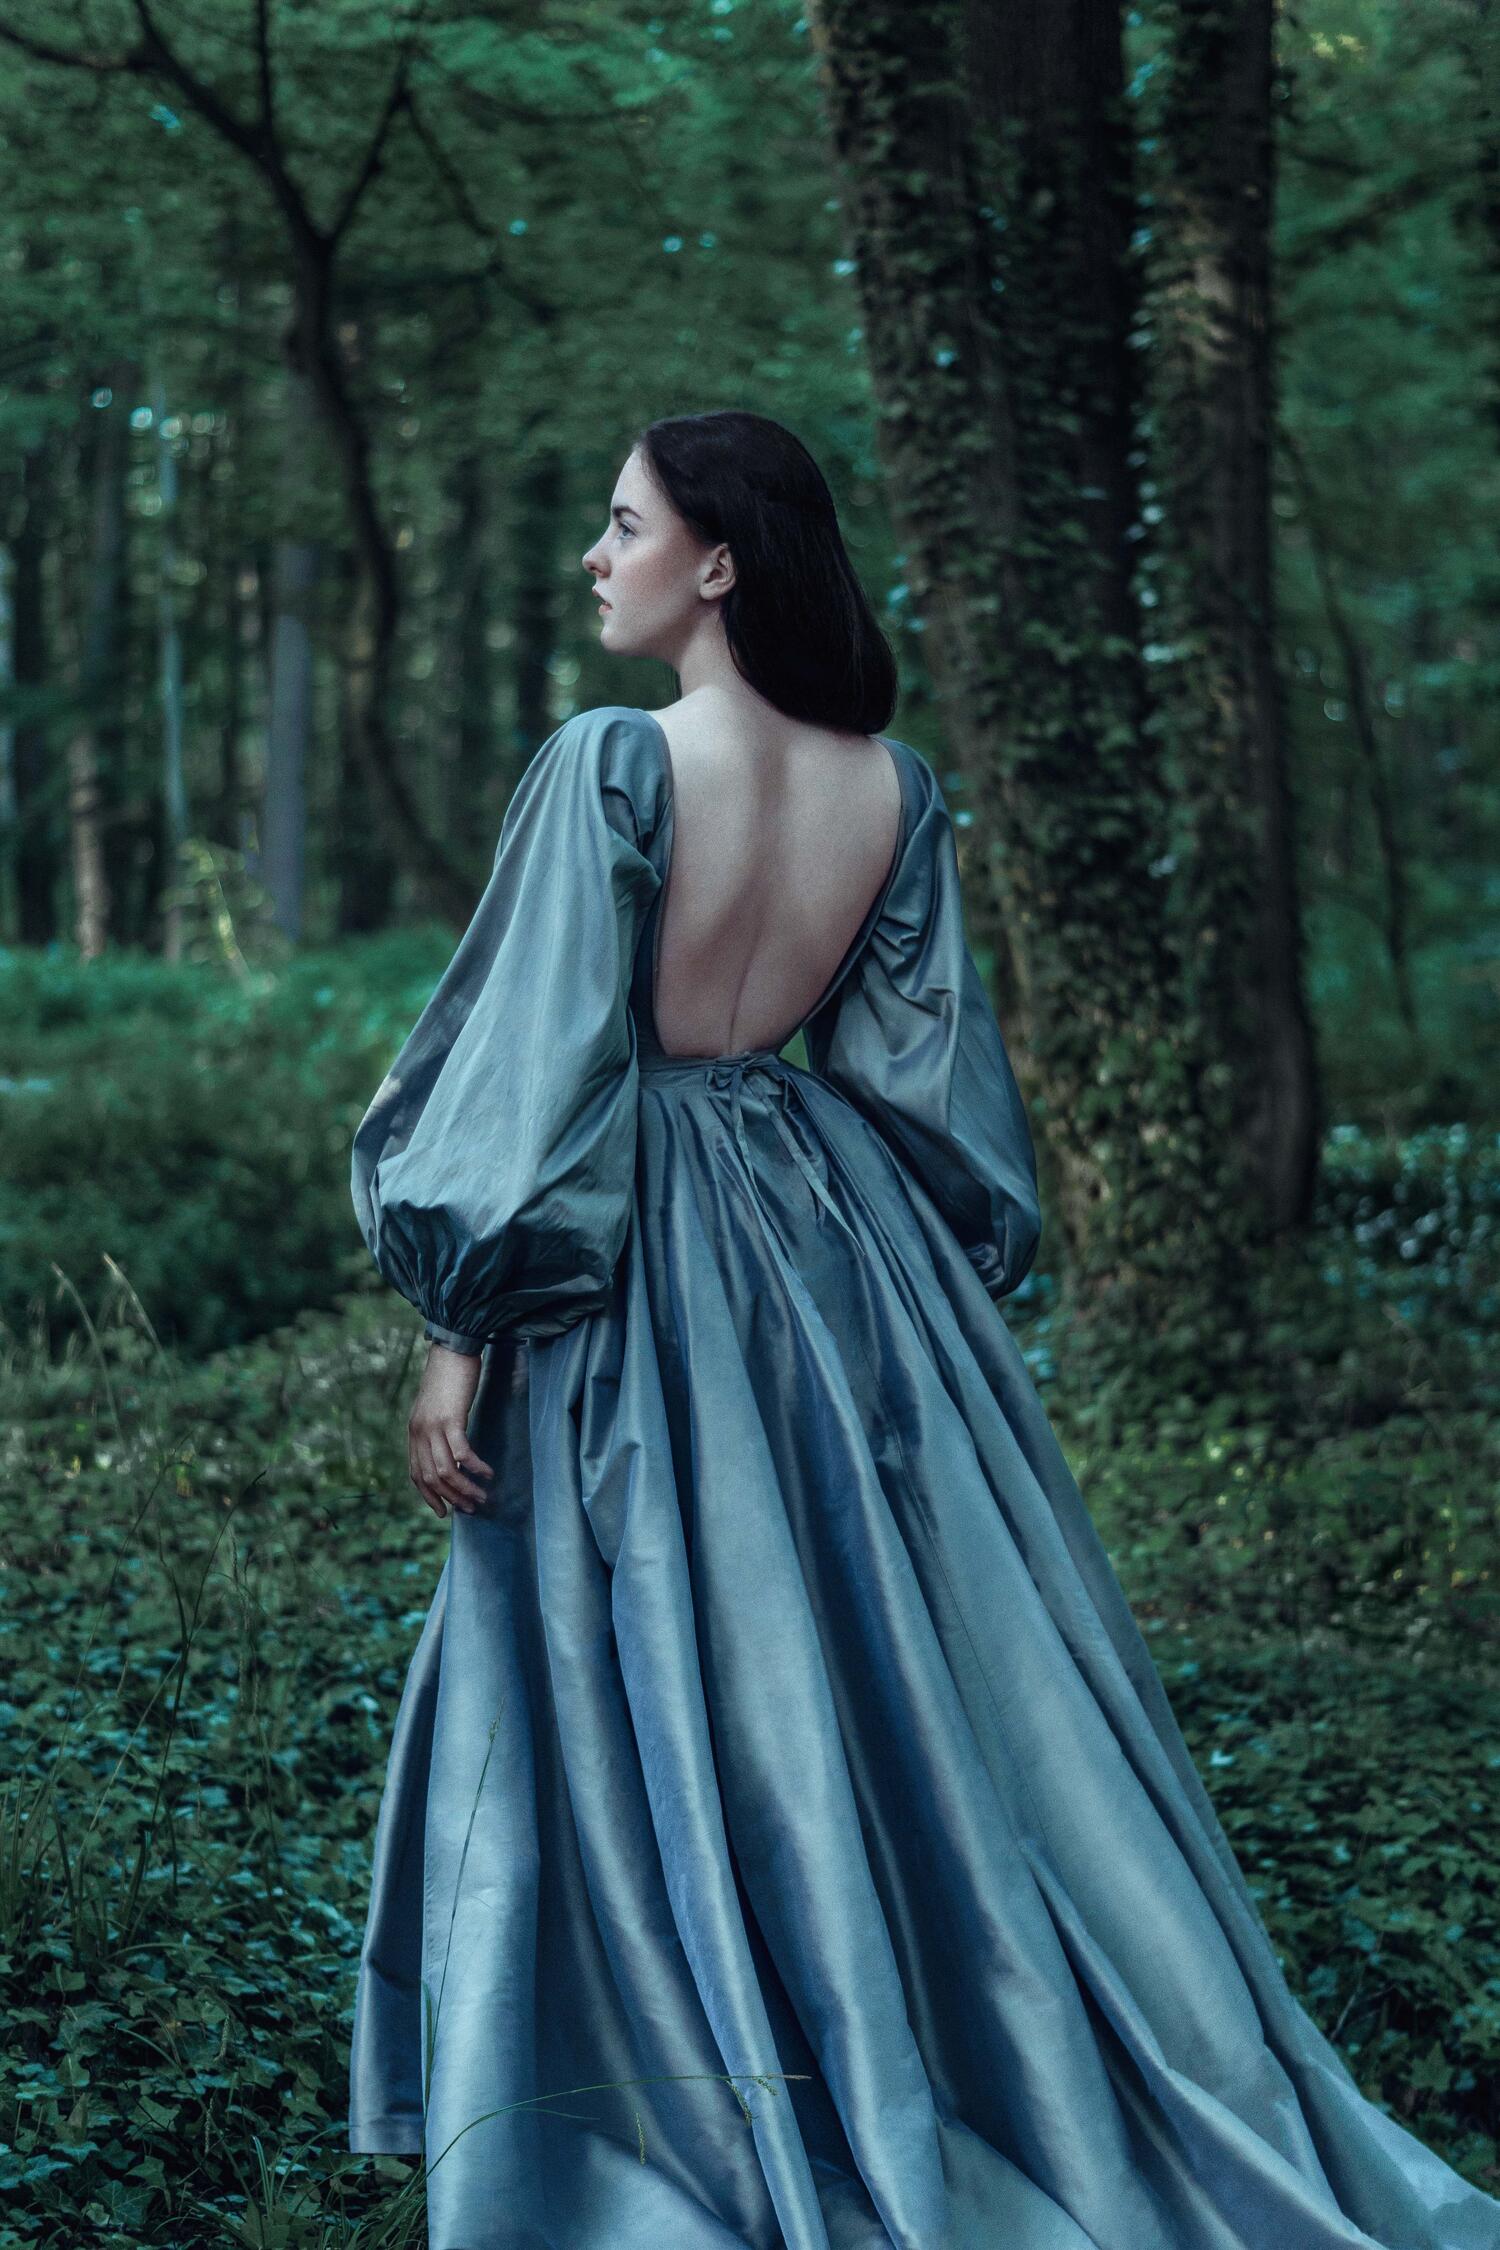 Kleid im Wald